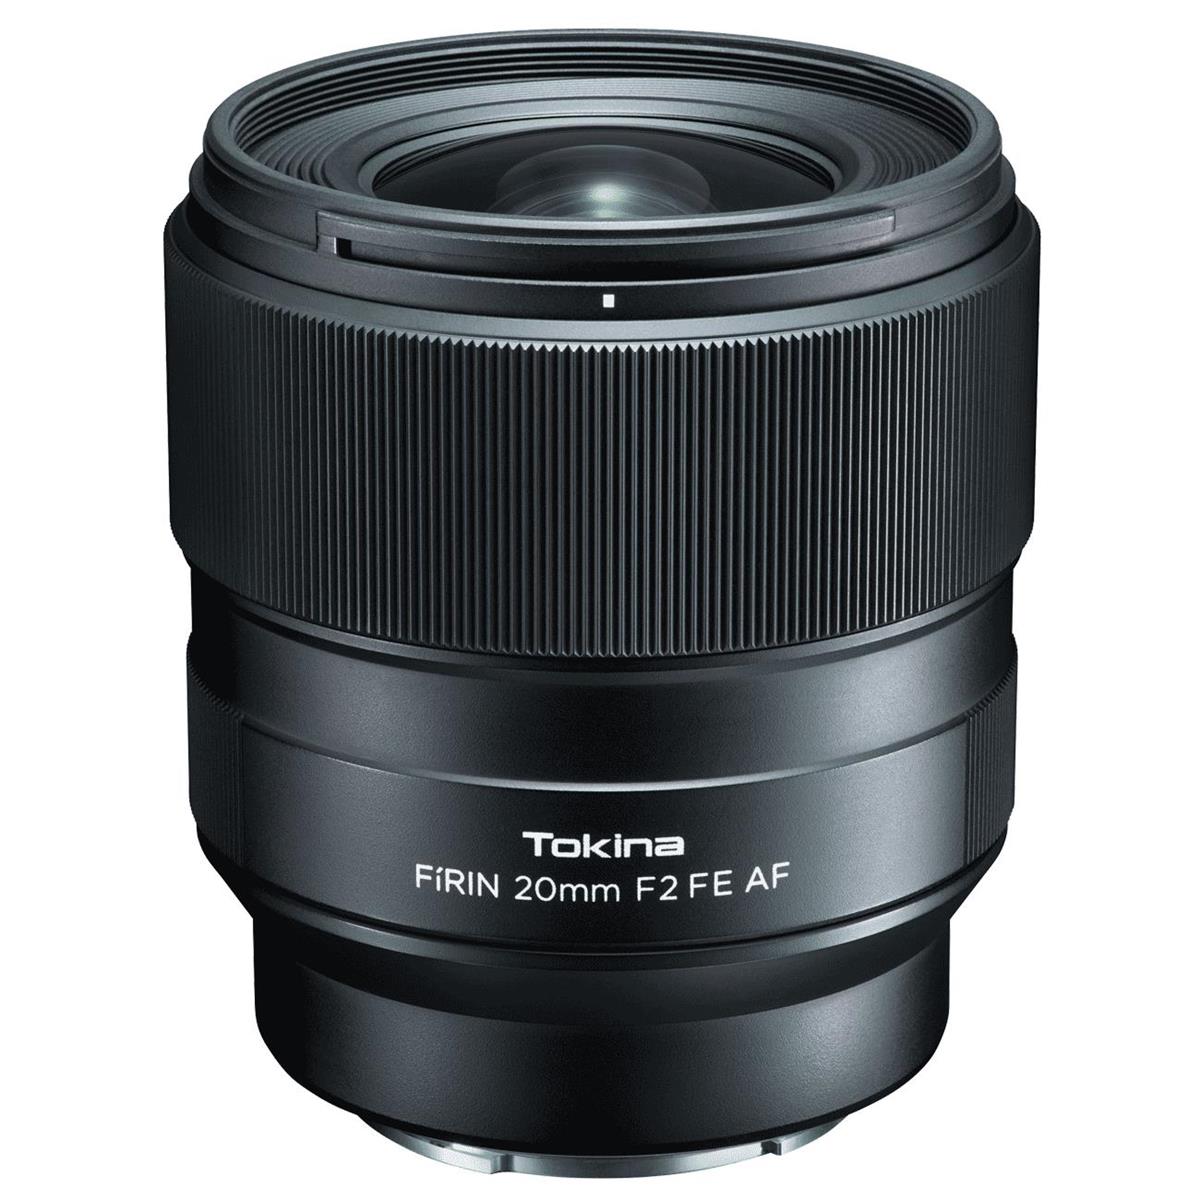 Tokina 20mm f/2 FE Firin AF Lens for Sony E